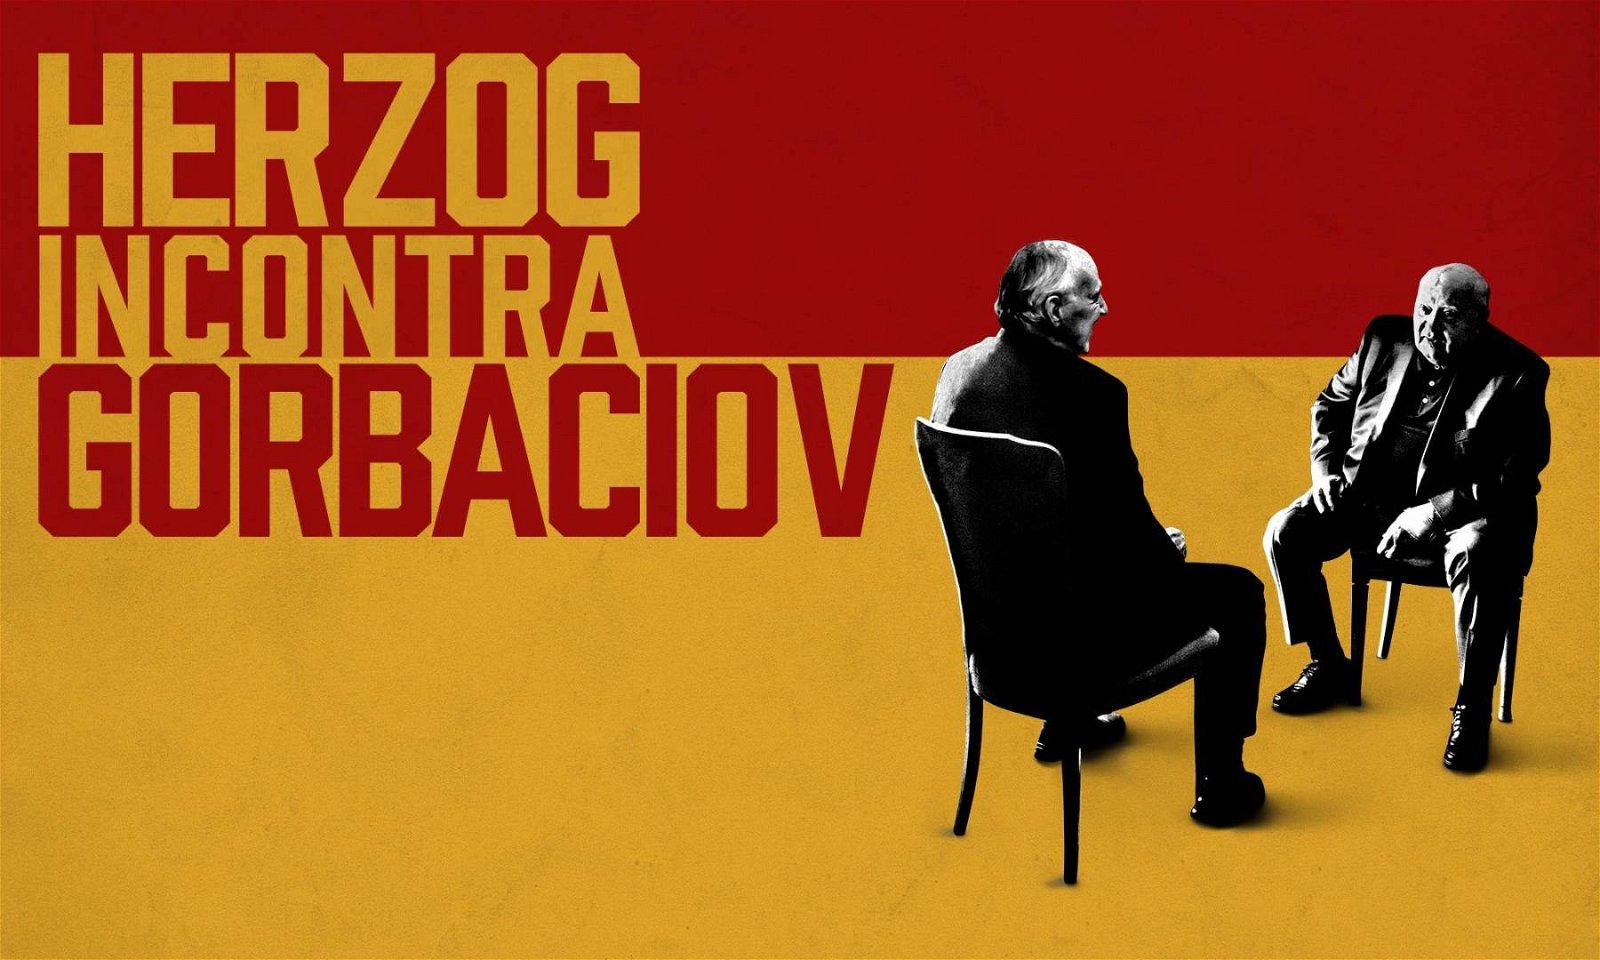 Immagine di Herzog incontra Gorbaciov, dal 19 al 22 gennaio al Cinema